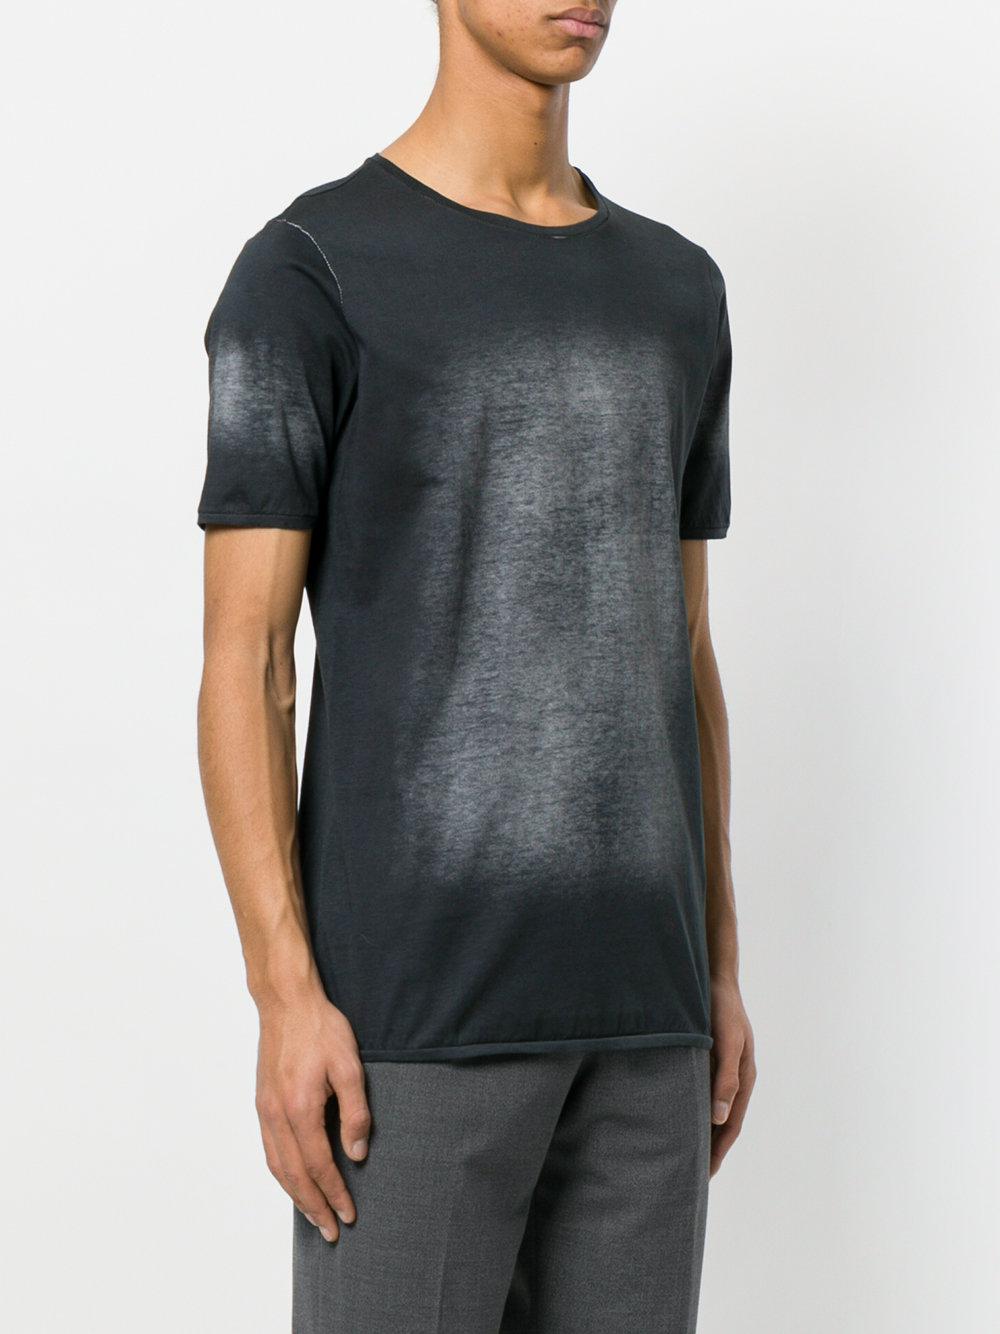 Avant Toi Cotton Bleach Effect T-shirt in Grey (Gray) for Men - Lyst